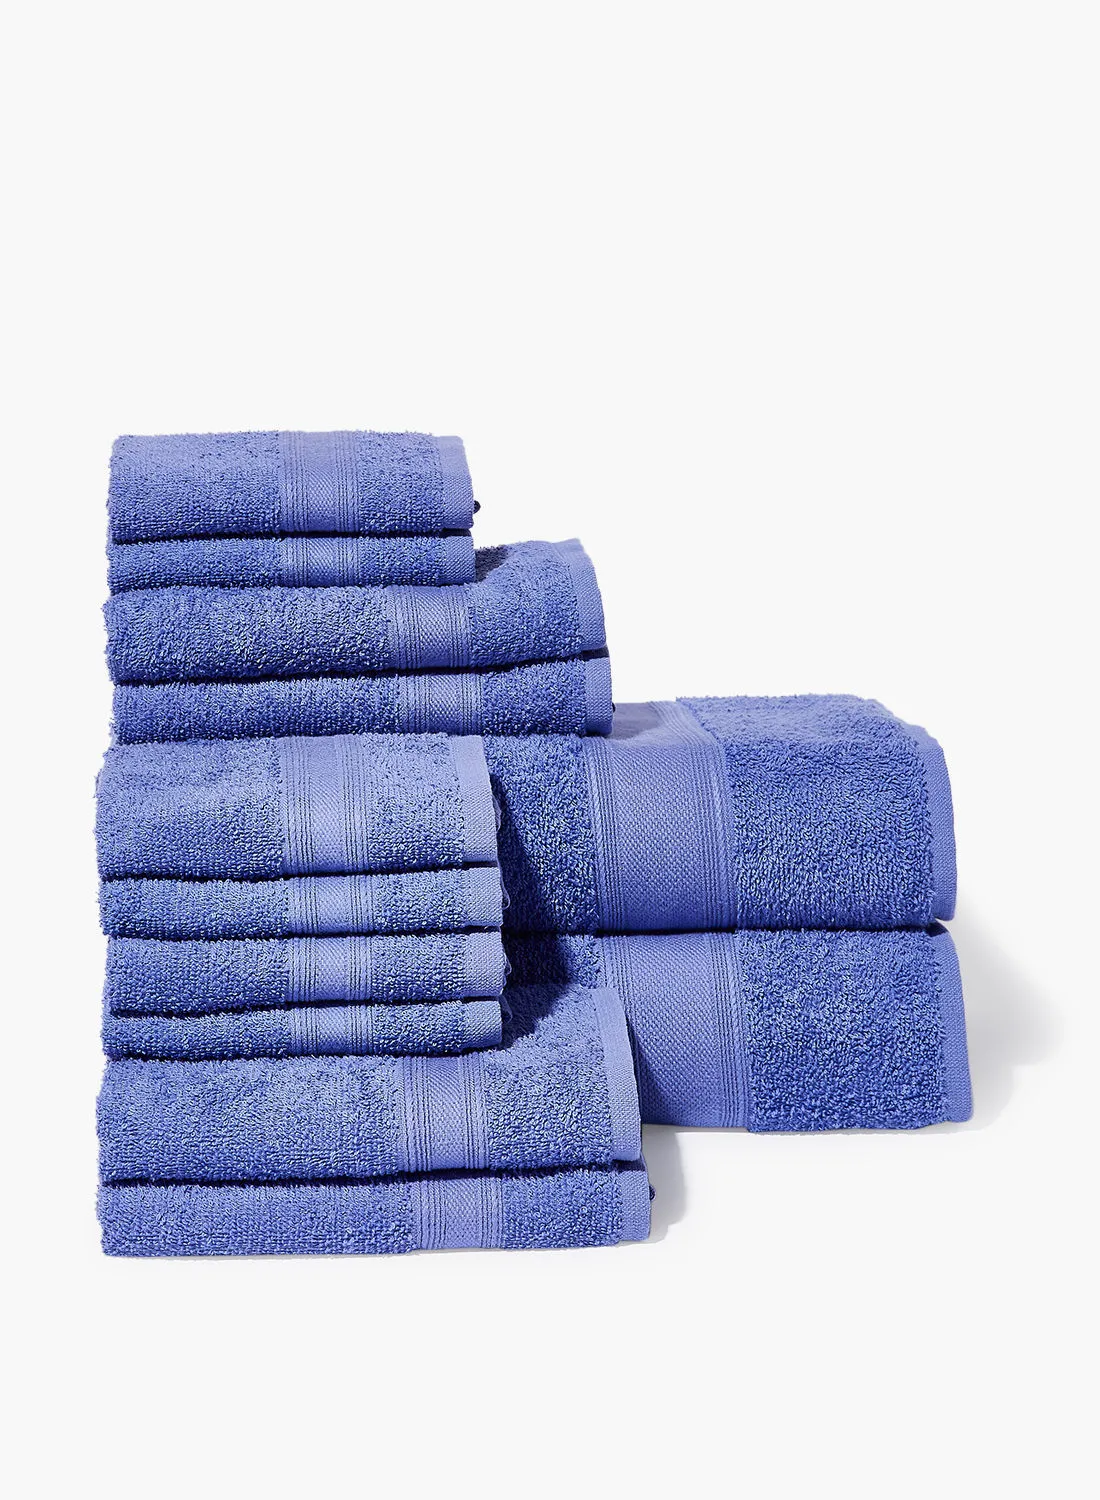 Amal 12 Piece Bathroom Towel Set - 400 GSM 100% Cotton Terry - 12 Face Towel - Periwinkle Color -Quick Dry - Super Absorbent